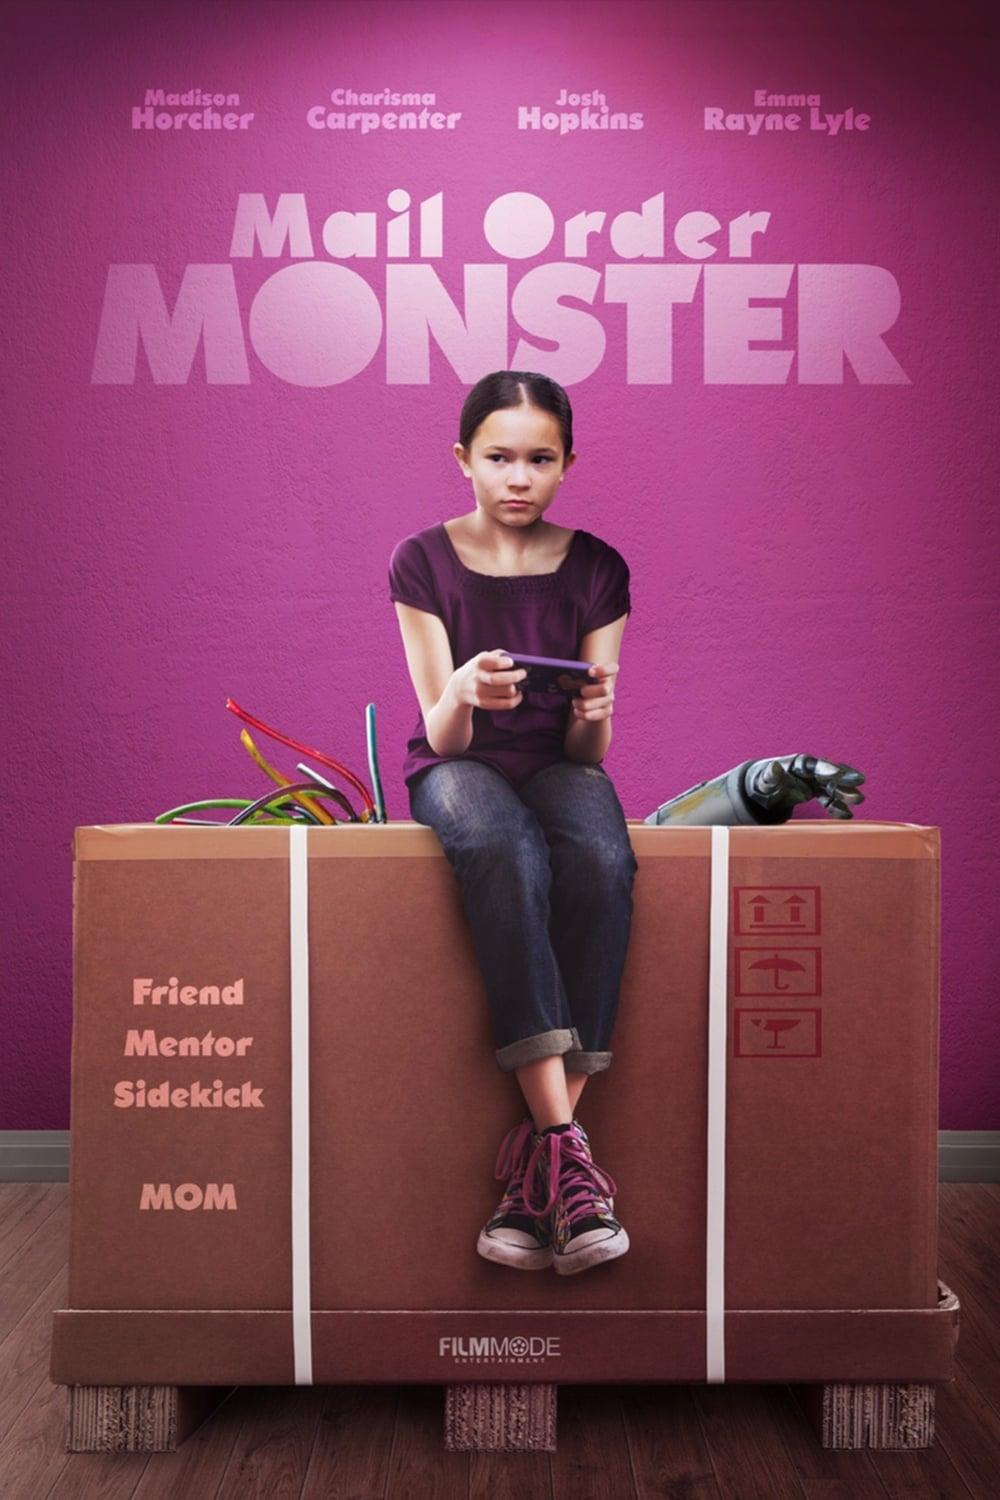 Mail Order Monster poster